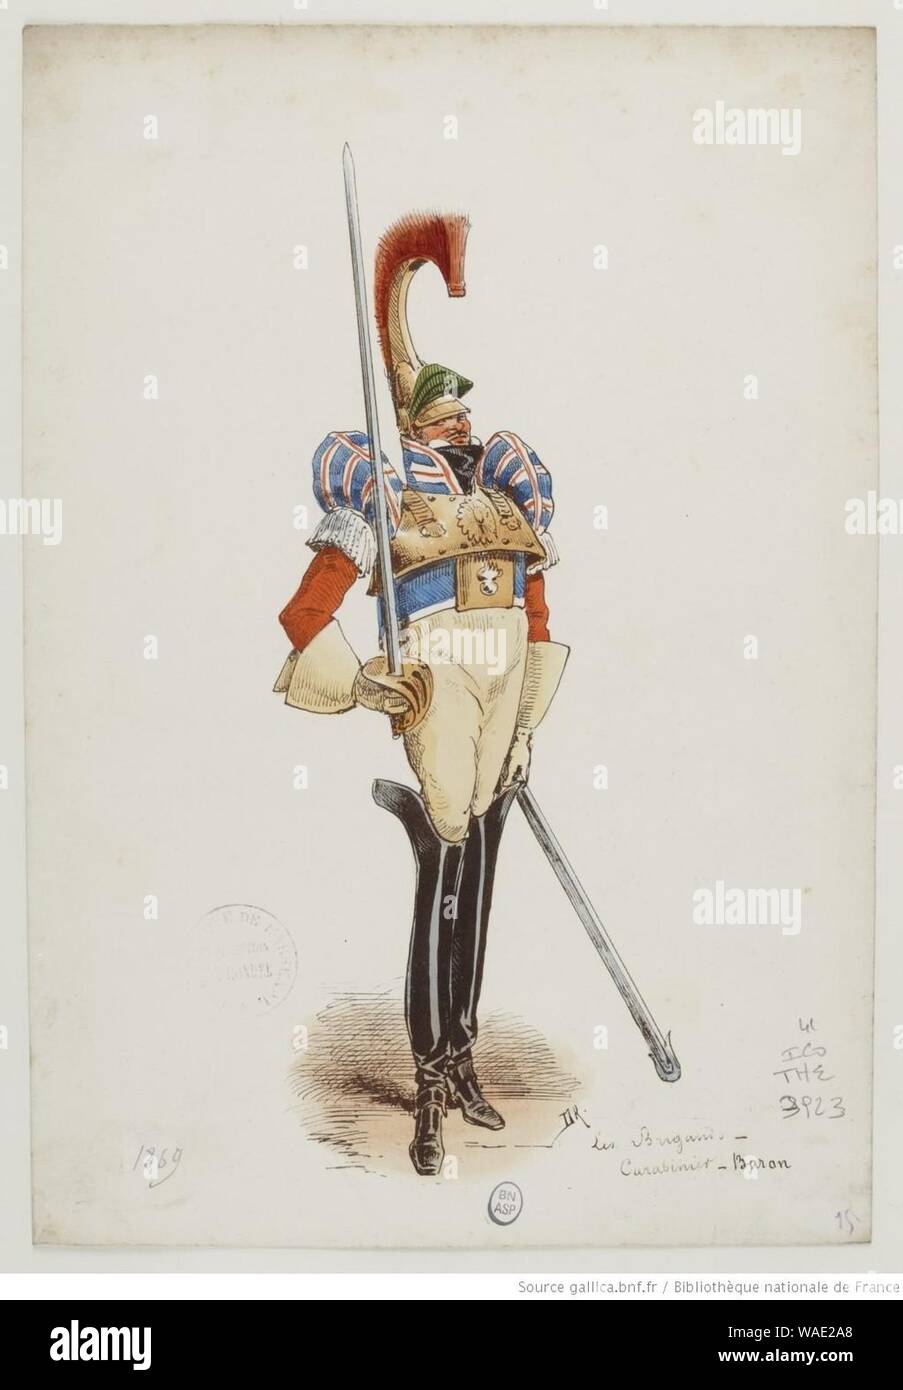 Draner - Les Brigands, Carabinier. Stock Photo